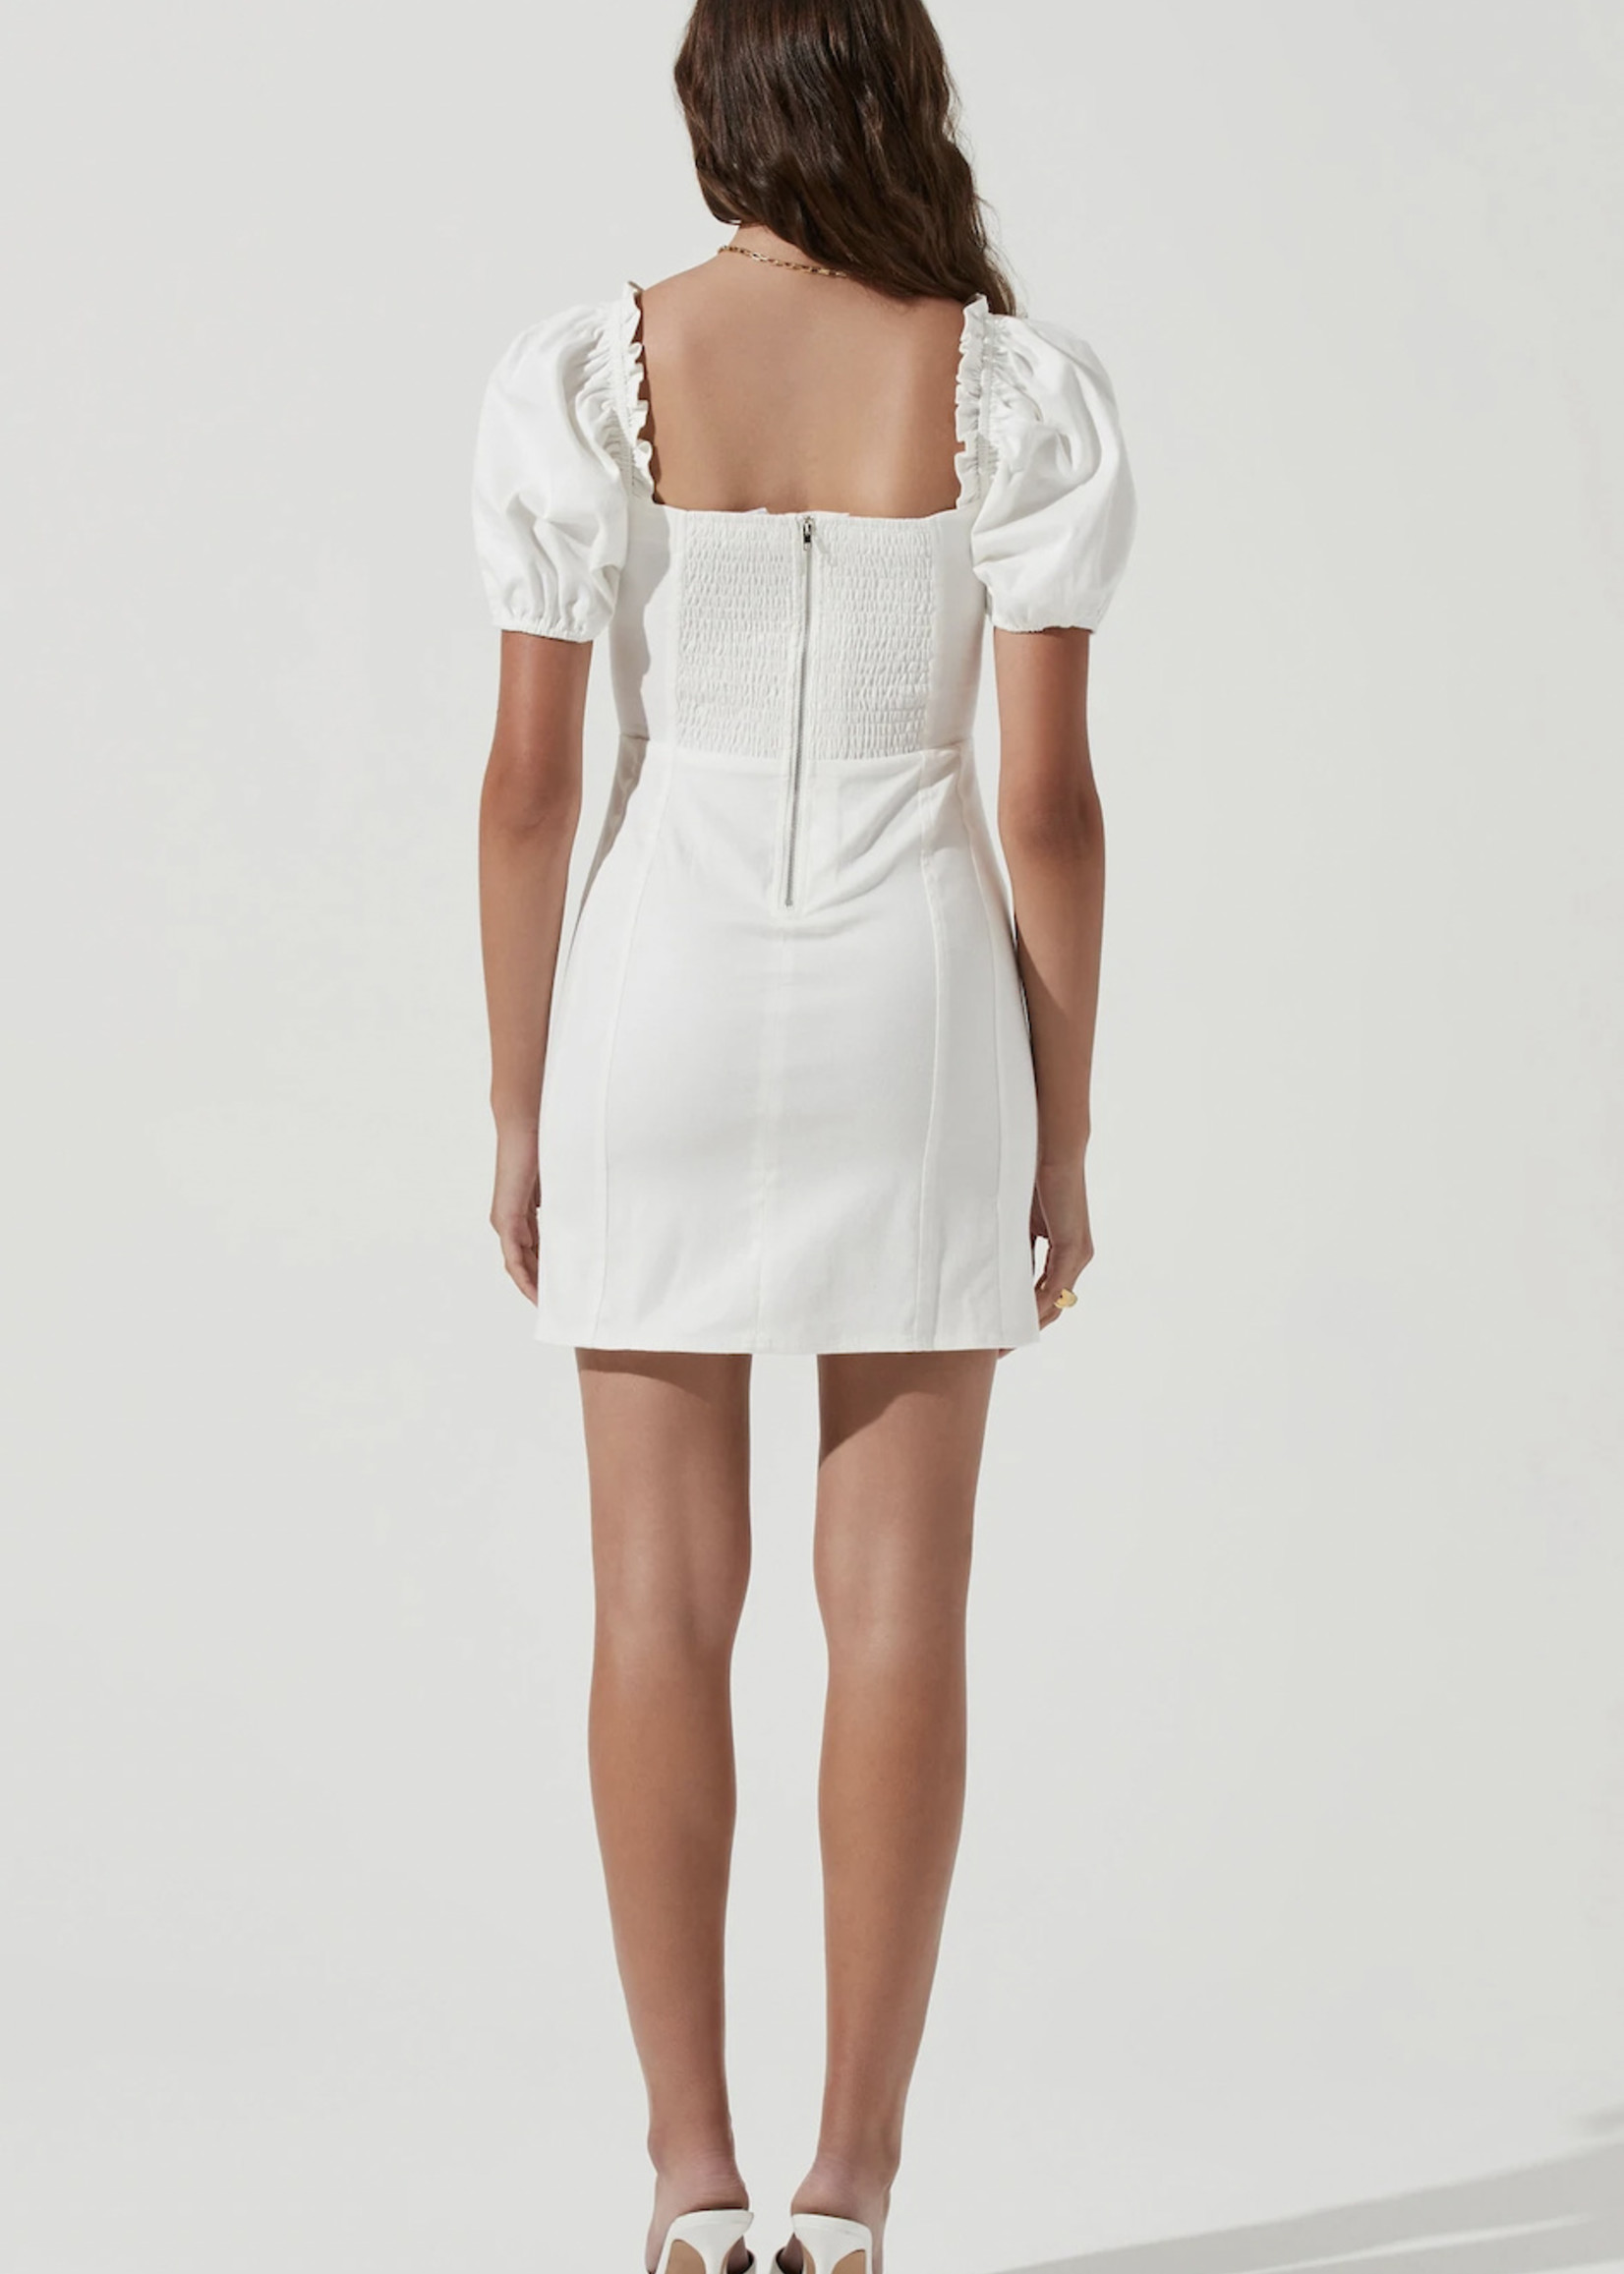 ASTR the Label Skylar White Puffed Mini Dress